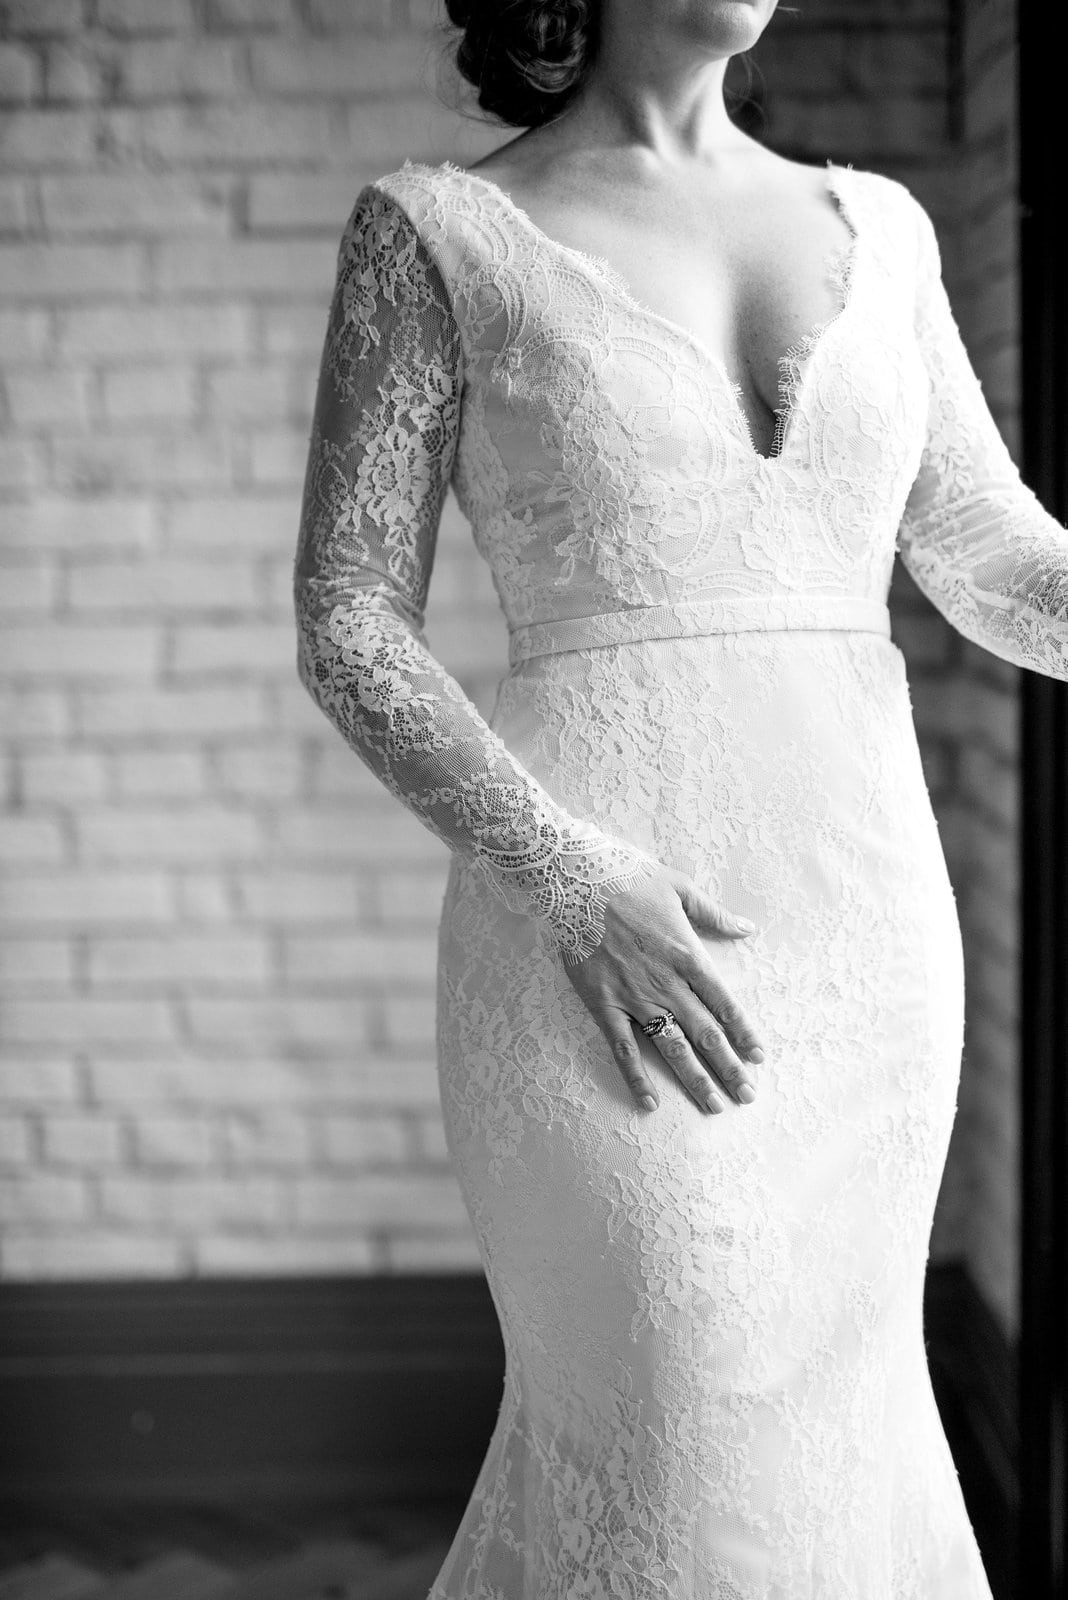 editorial bride portrait at storys building toronto wedding venue jacqueline james photography